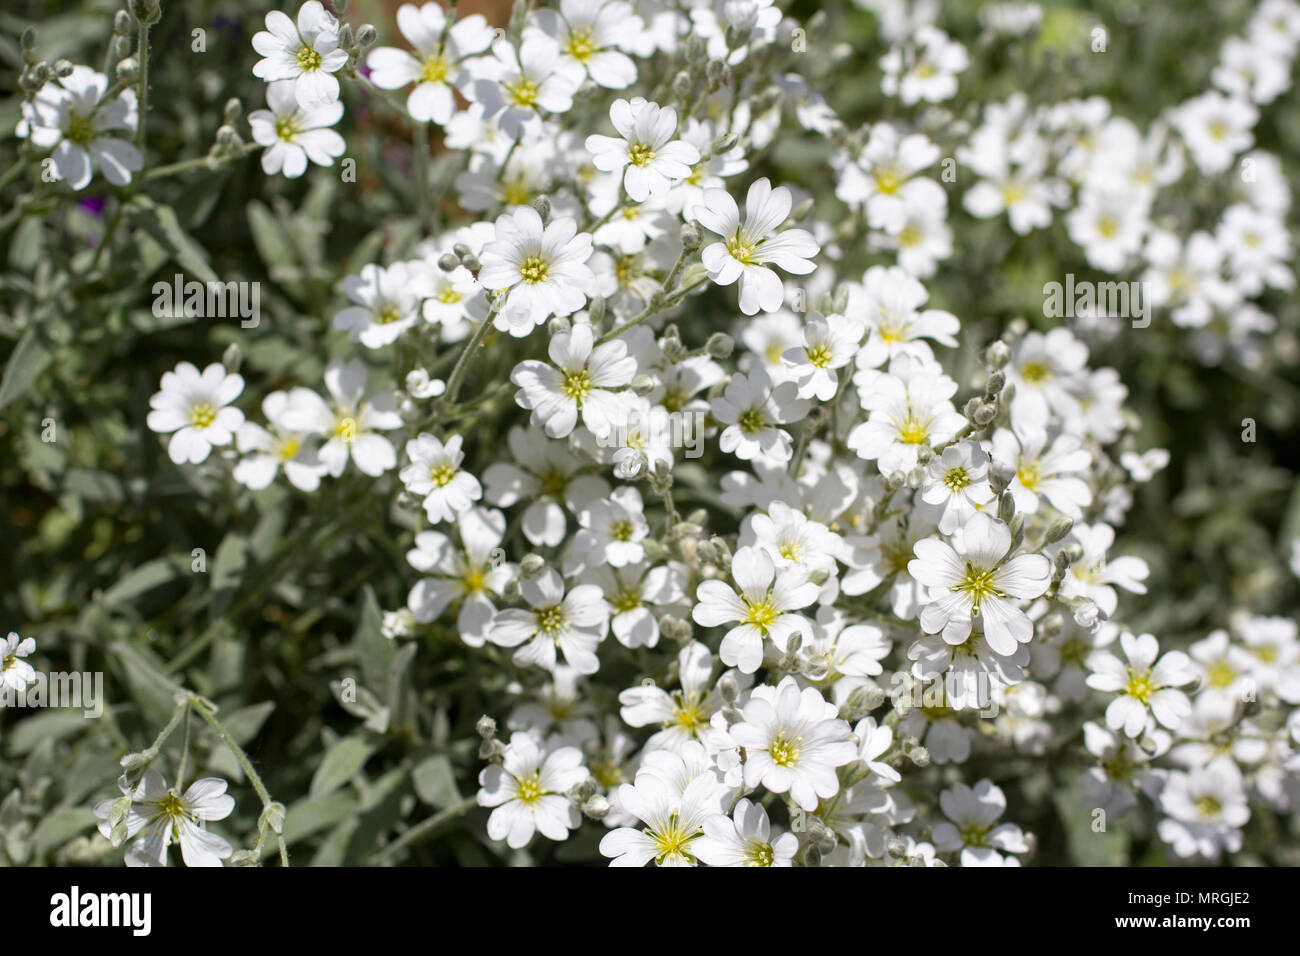 Snow-in-summer, Cerastium tomentosum, close up in the garden Stock Photo